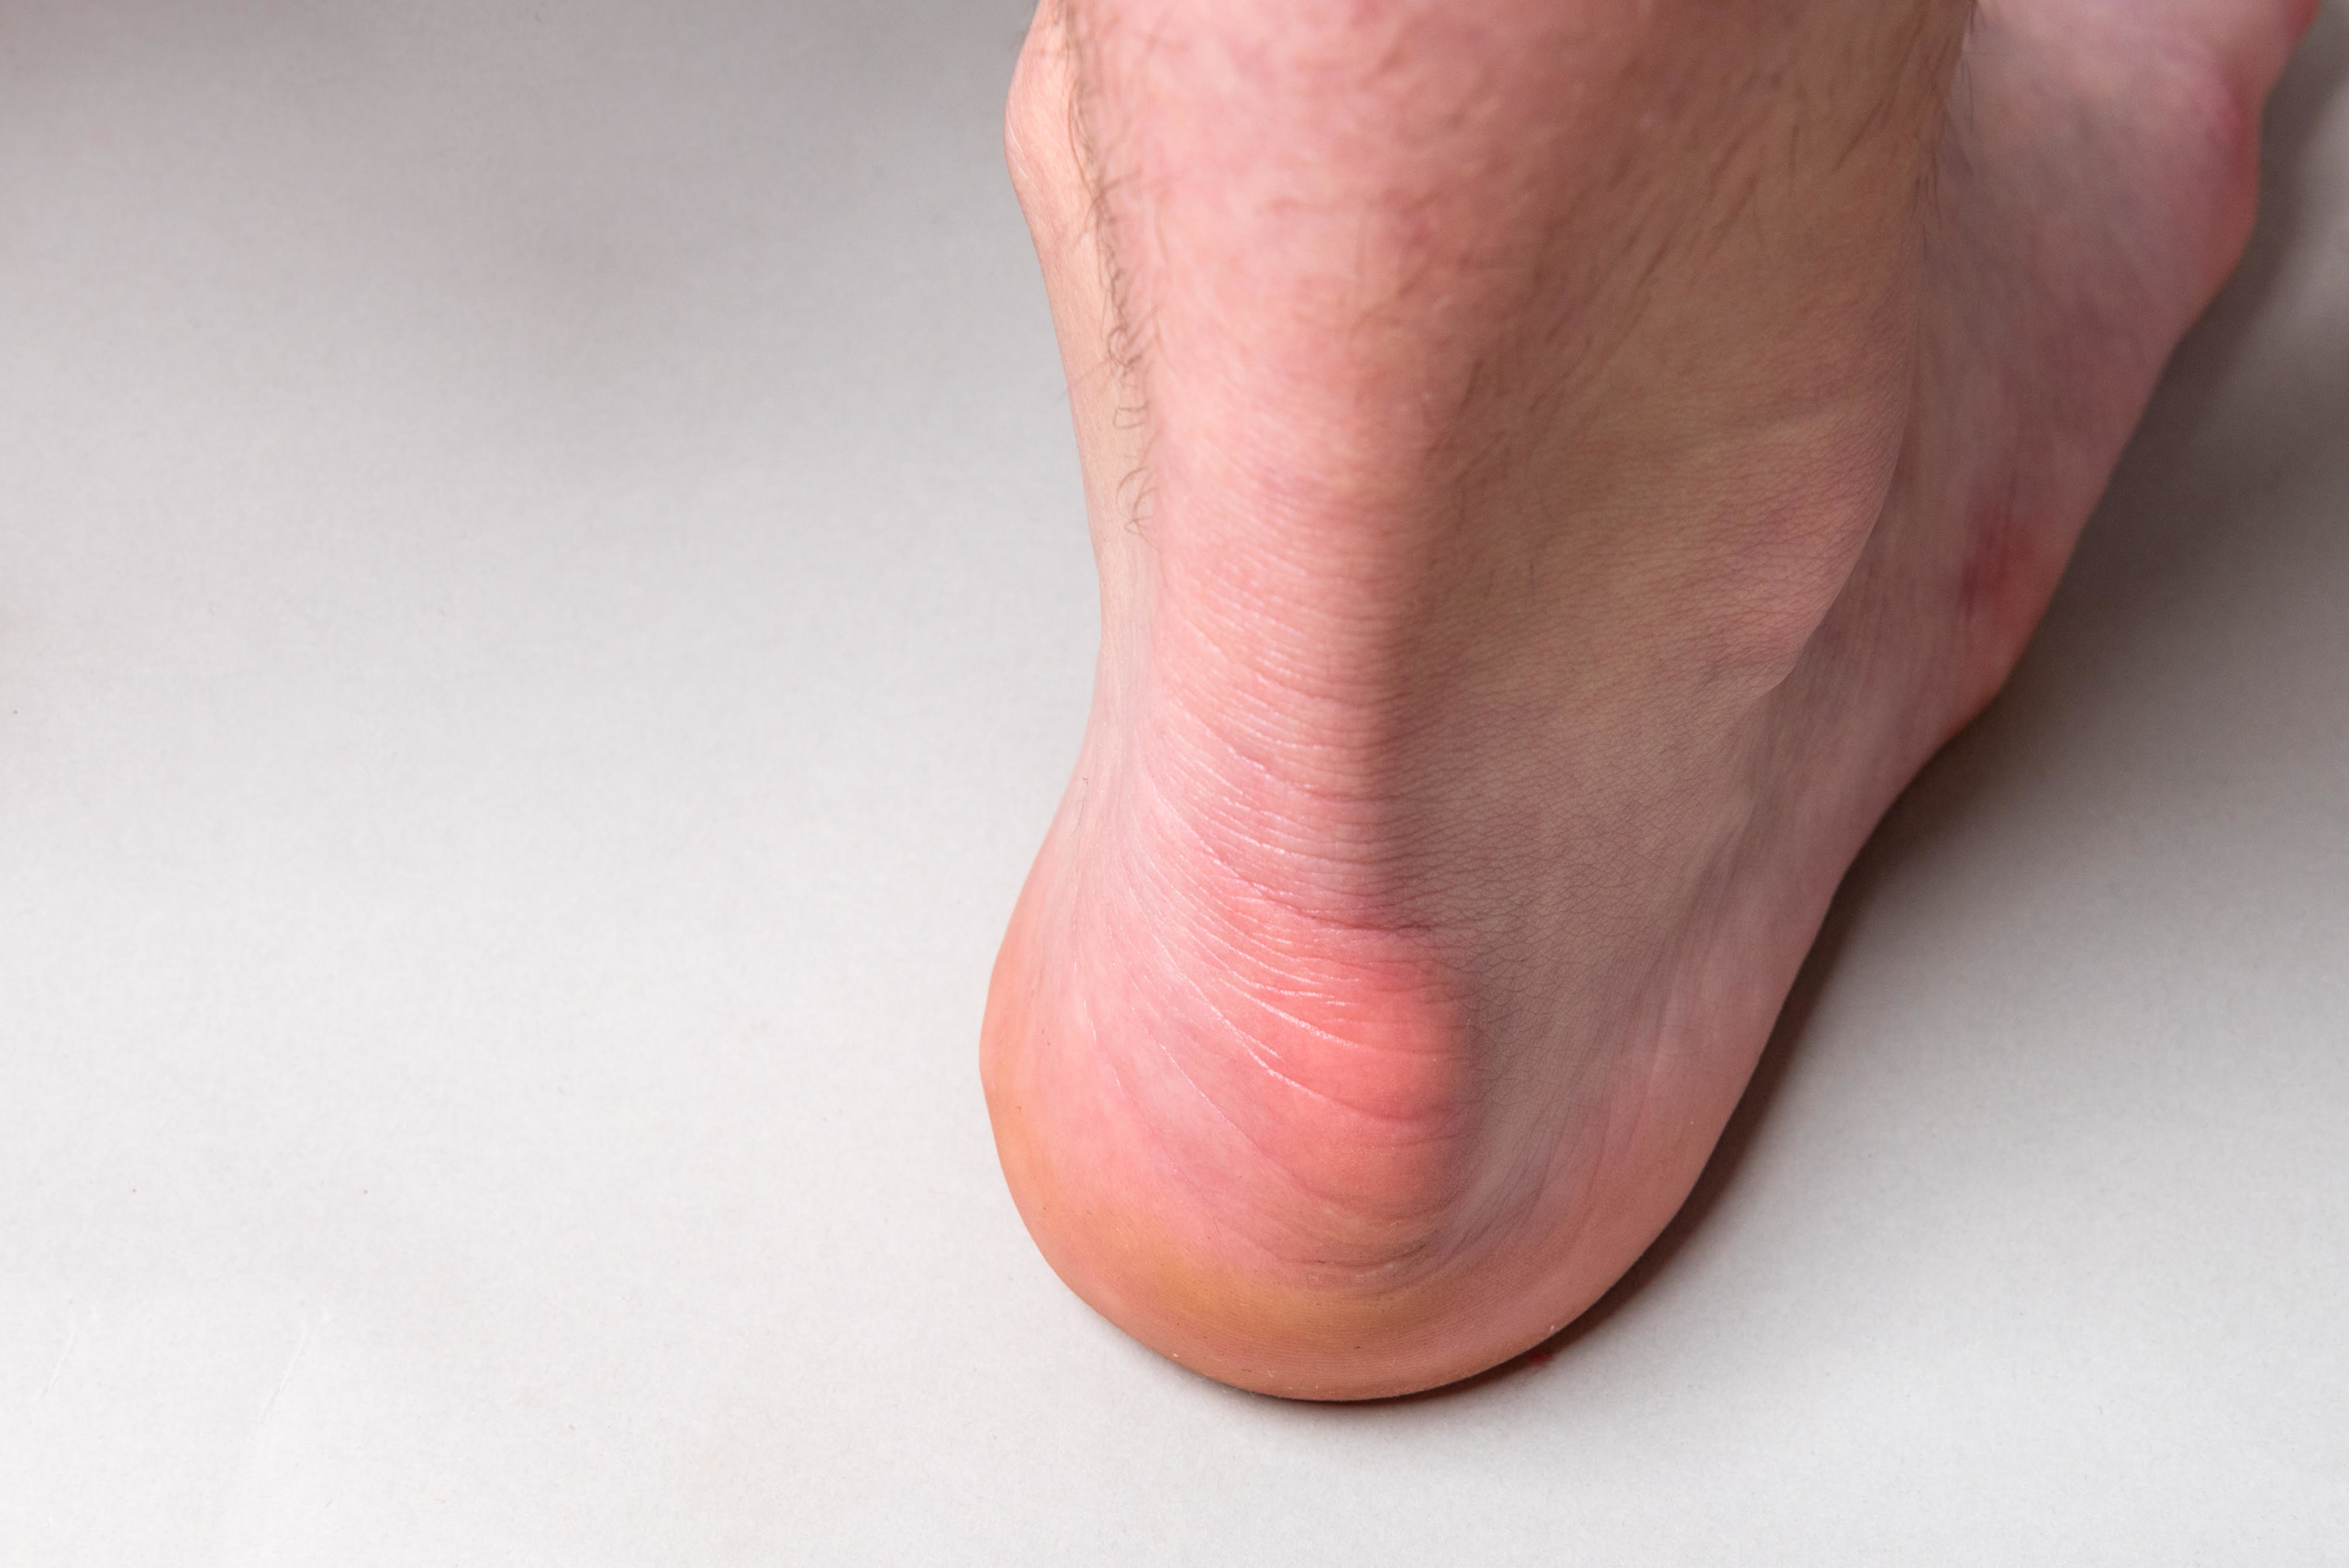 Bump on the back of heel bone called Haglund’s deformity on gray